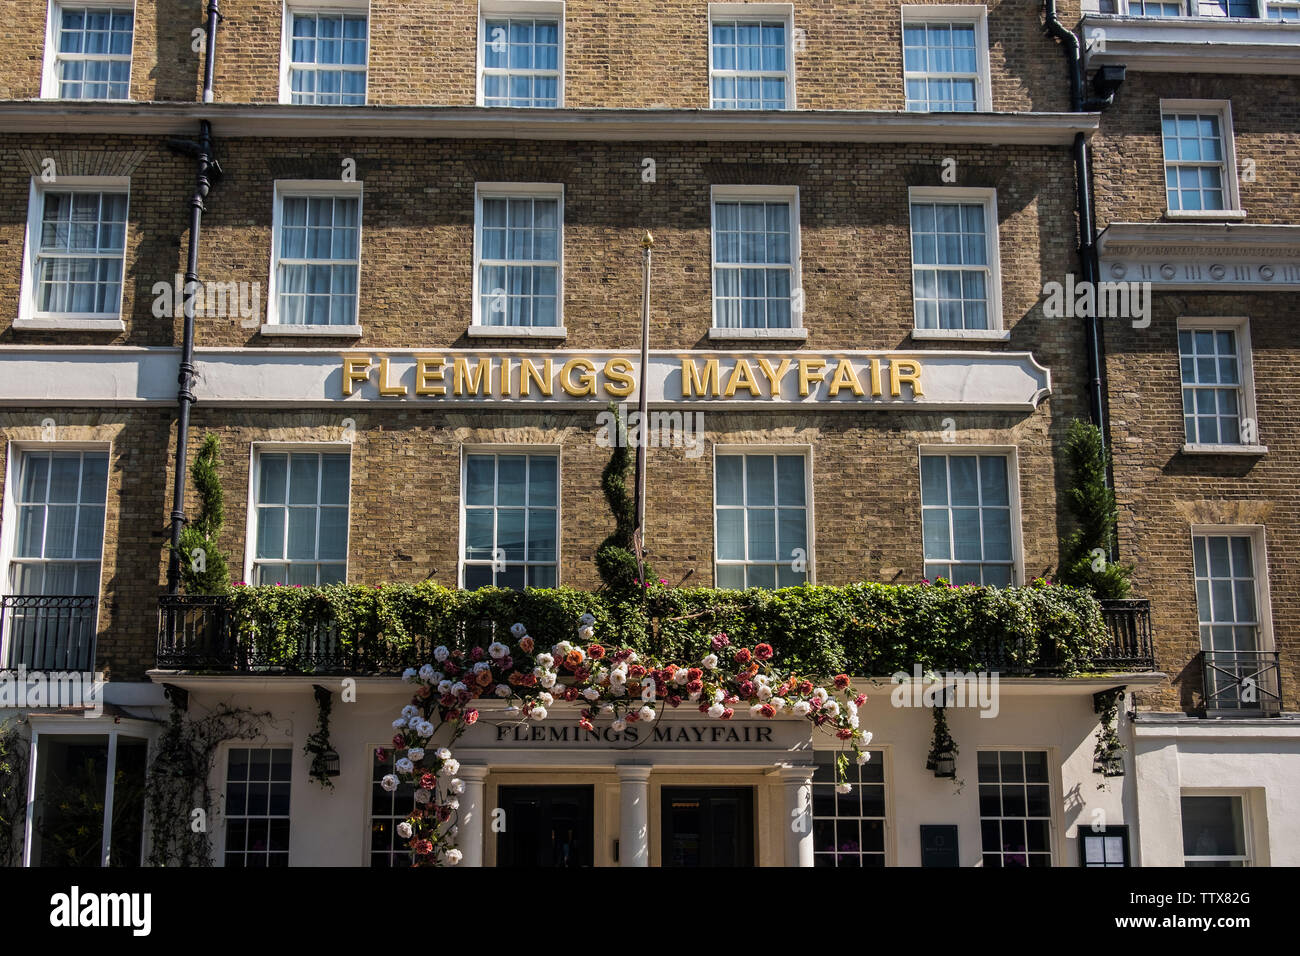 Flemings Mayfair Hotel, 7-12 Half Moon Street, London, England, U.K. Stock Photo